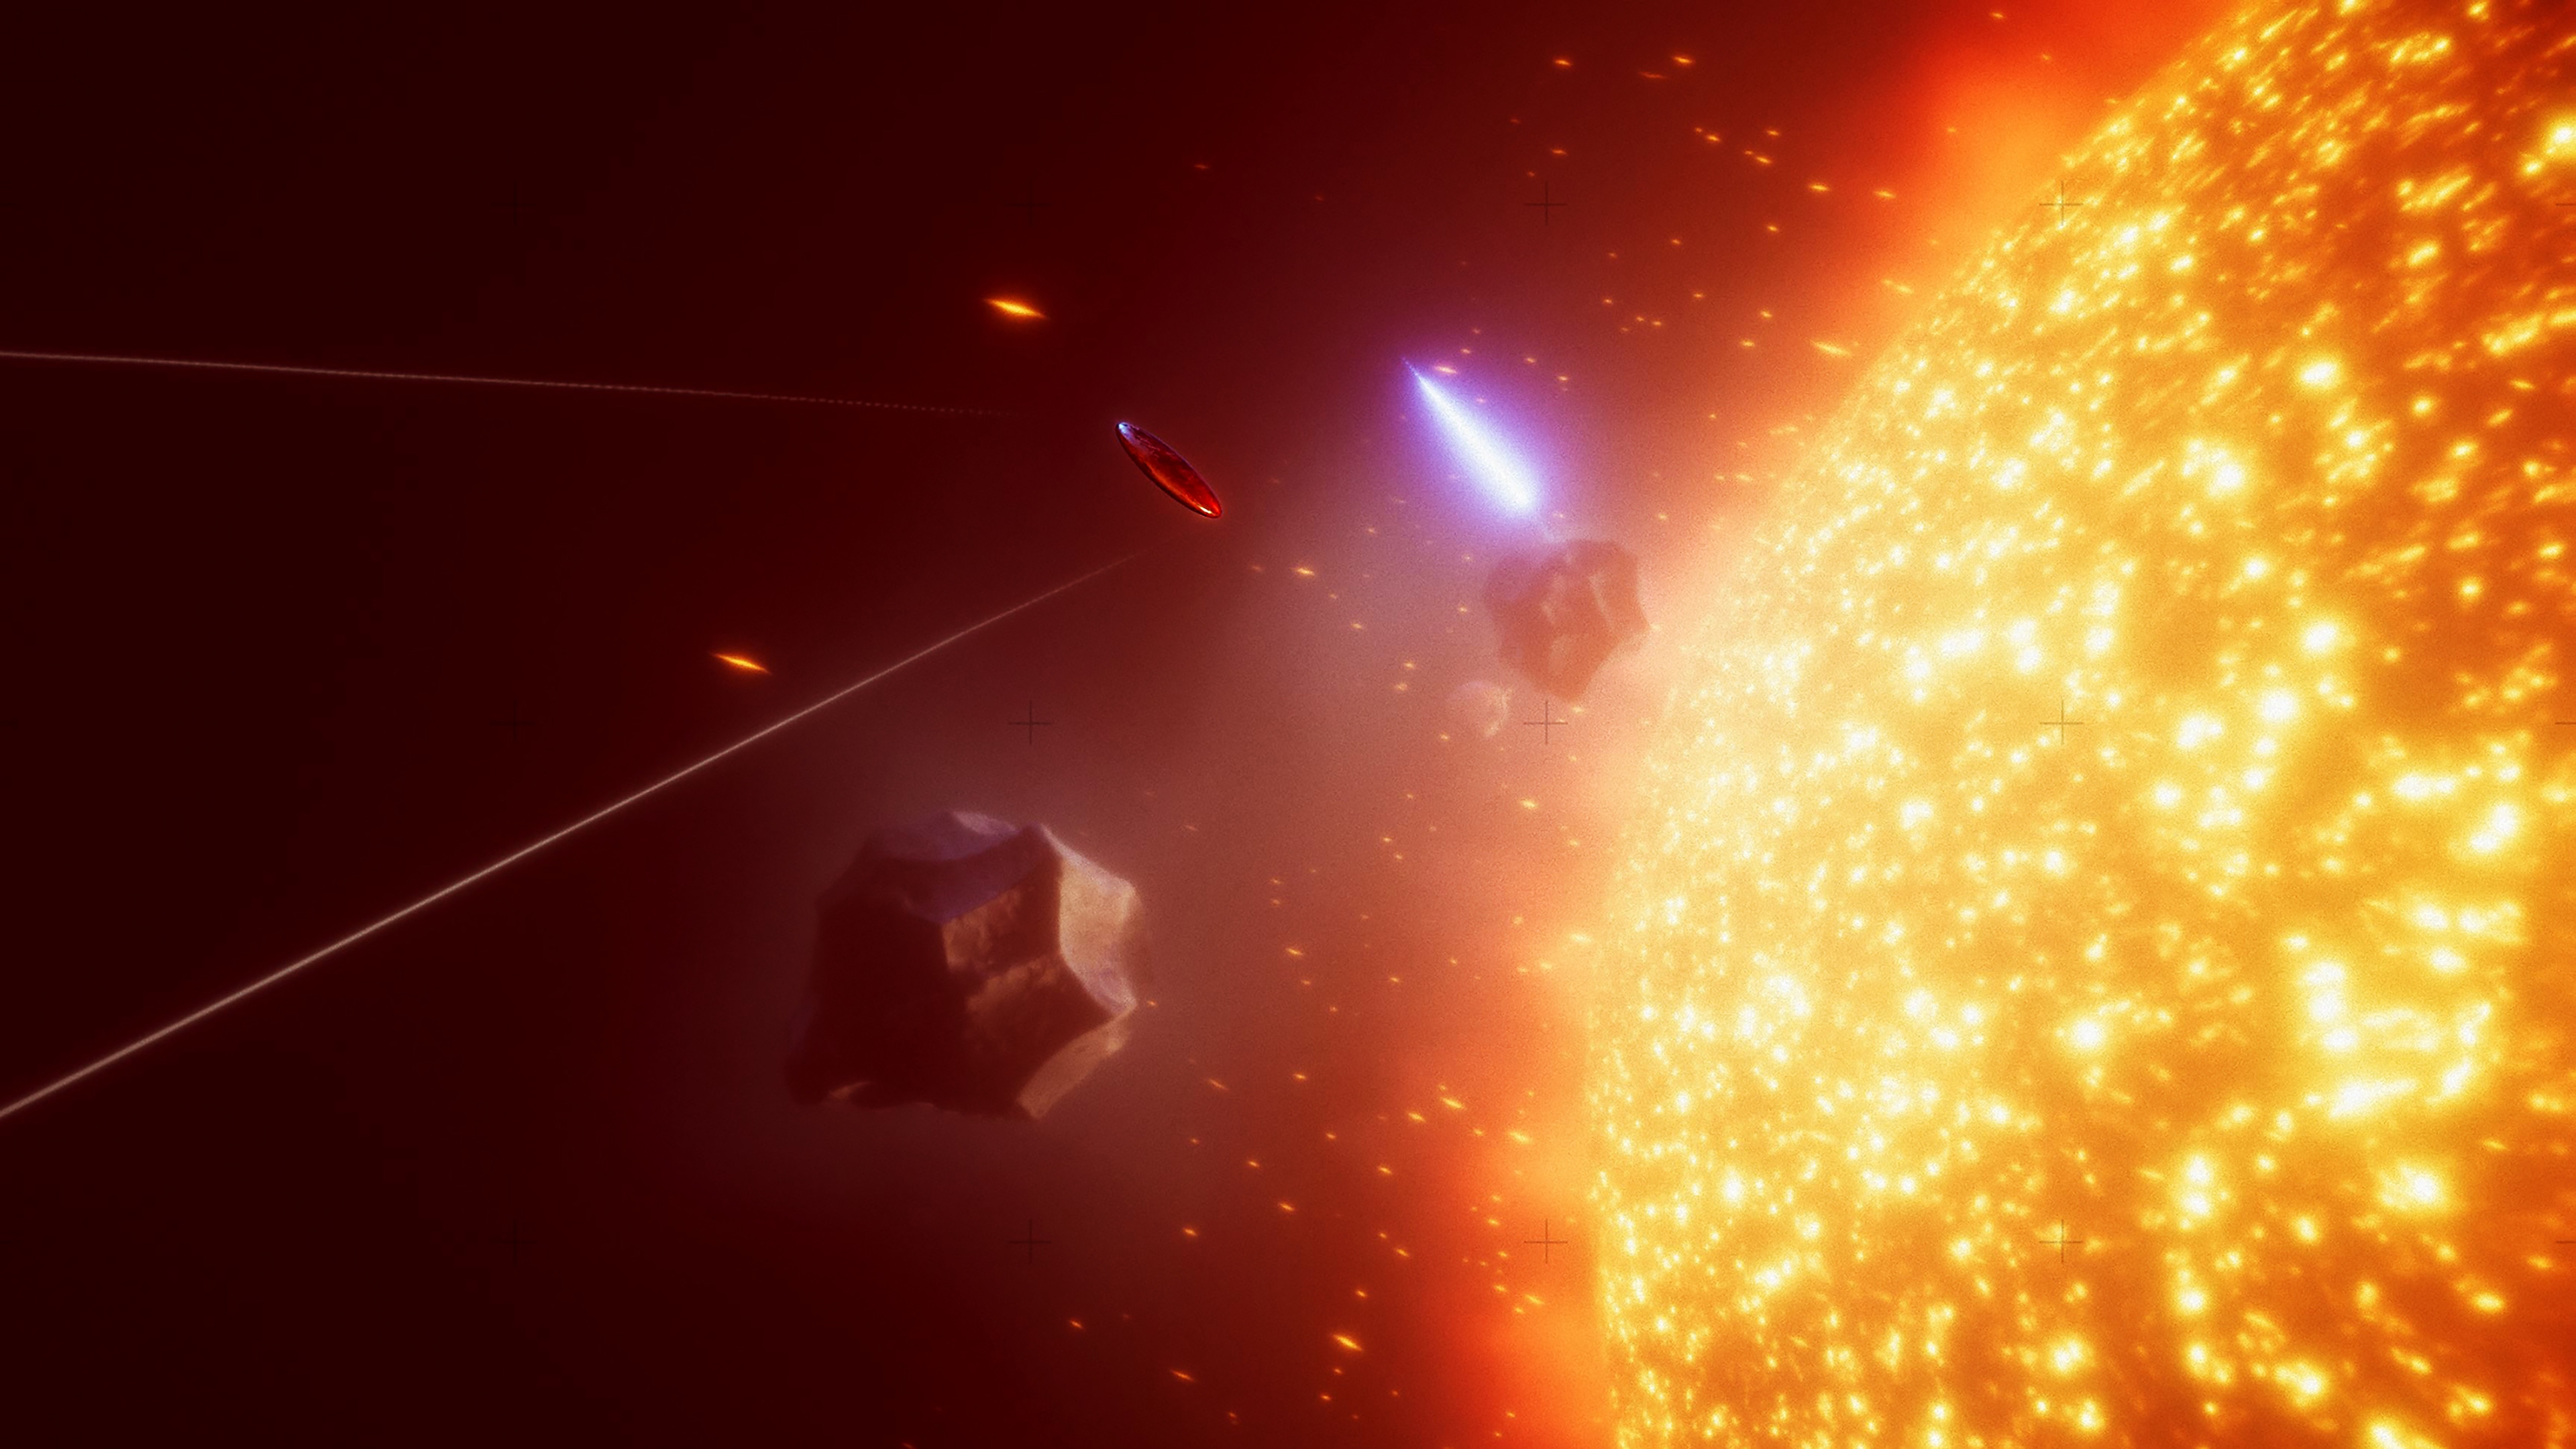 Exo One screenshot showing a flying object near a star-like entity